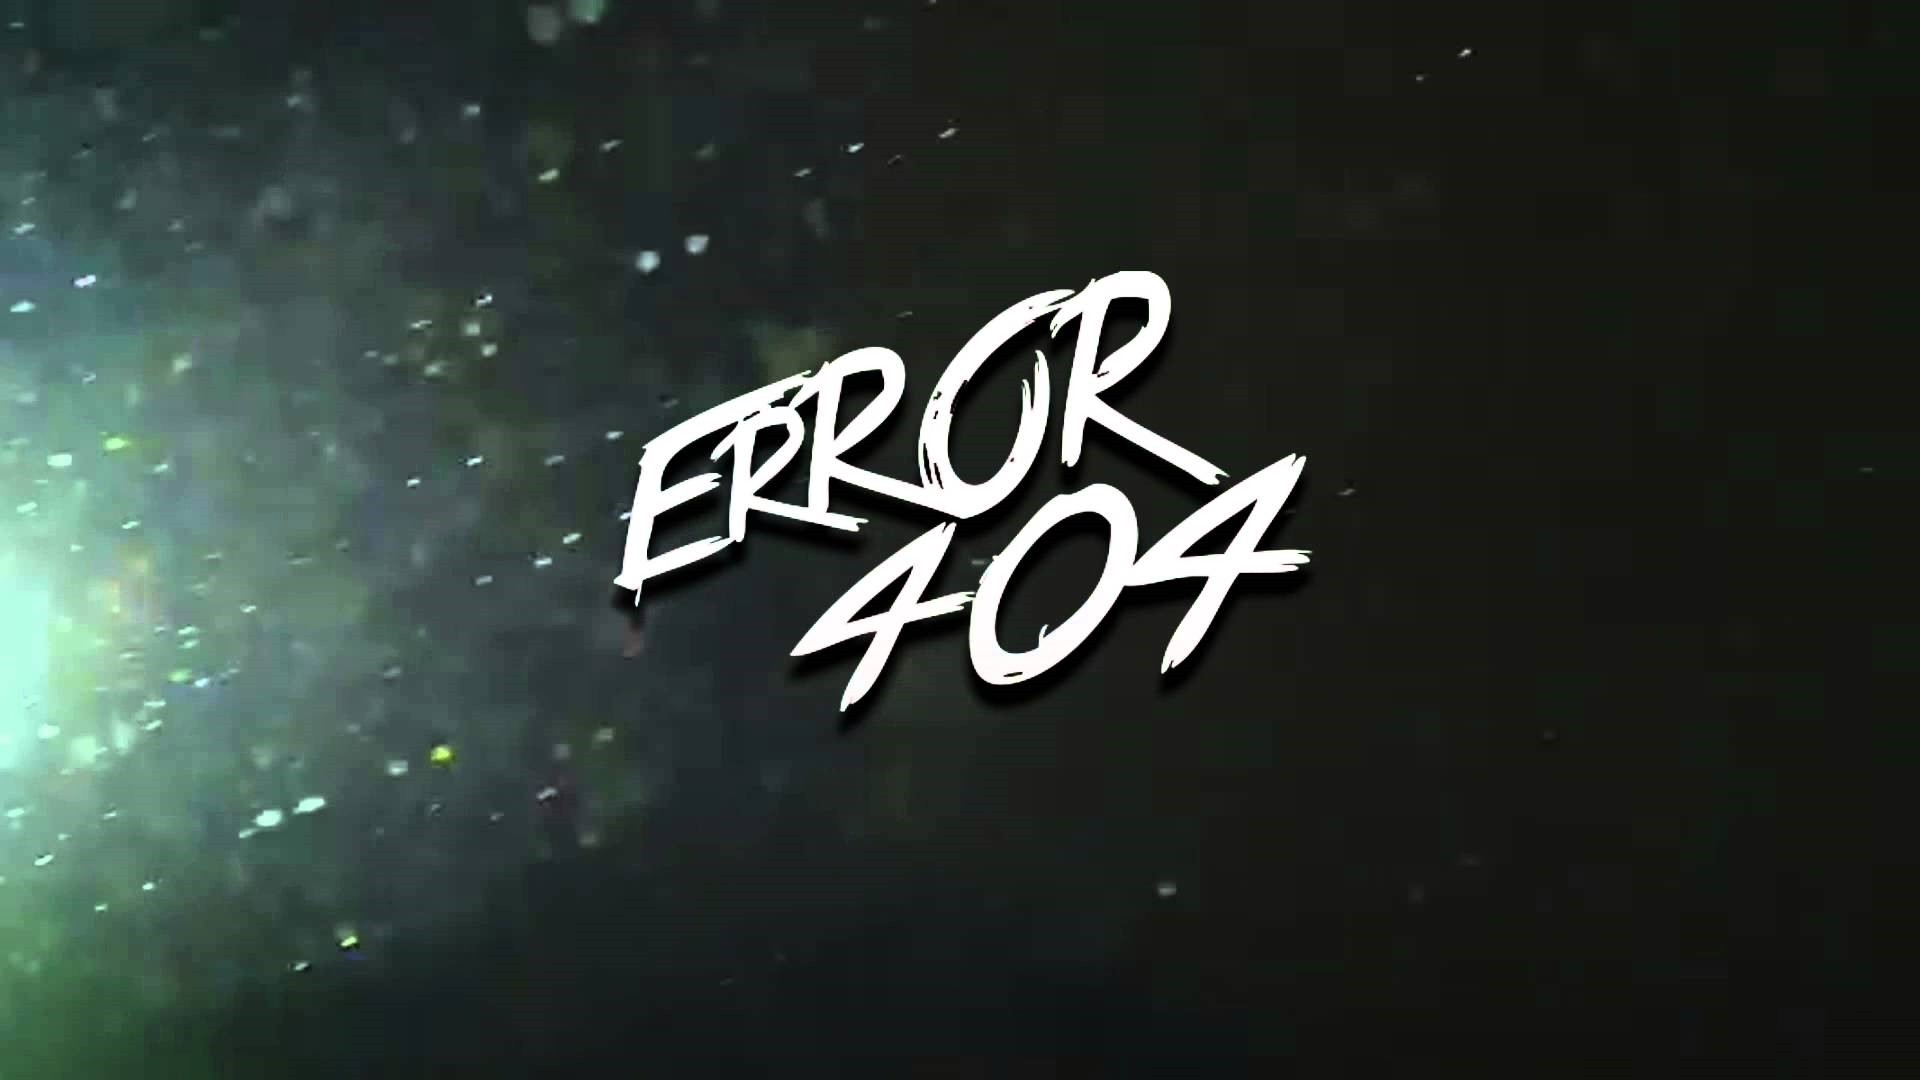 Error 404 Wallpaper image hd